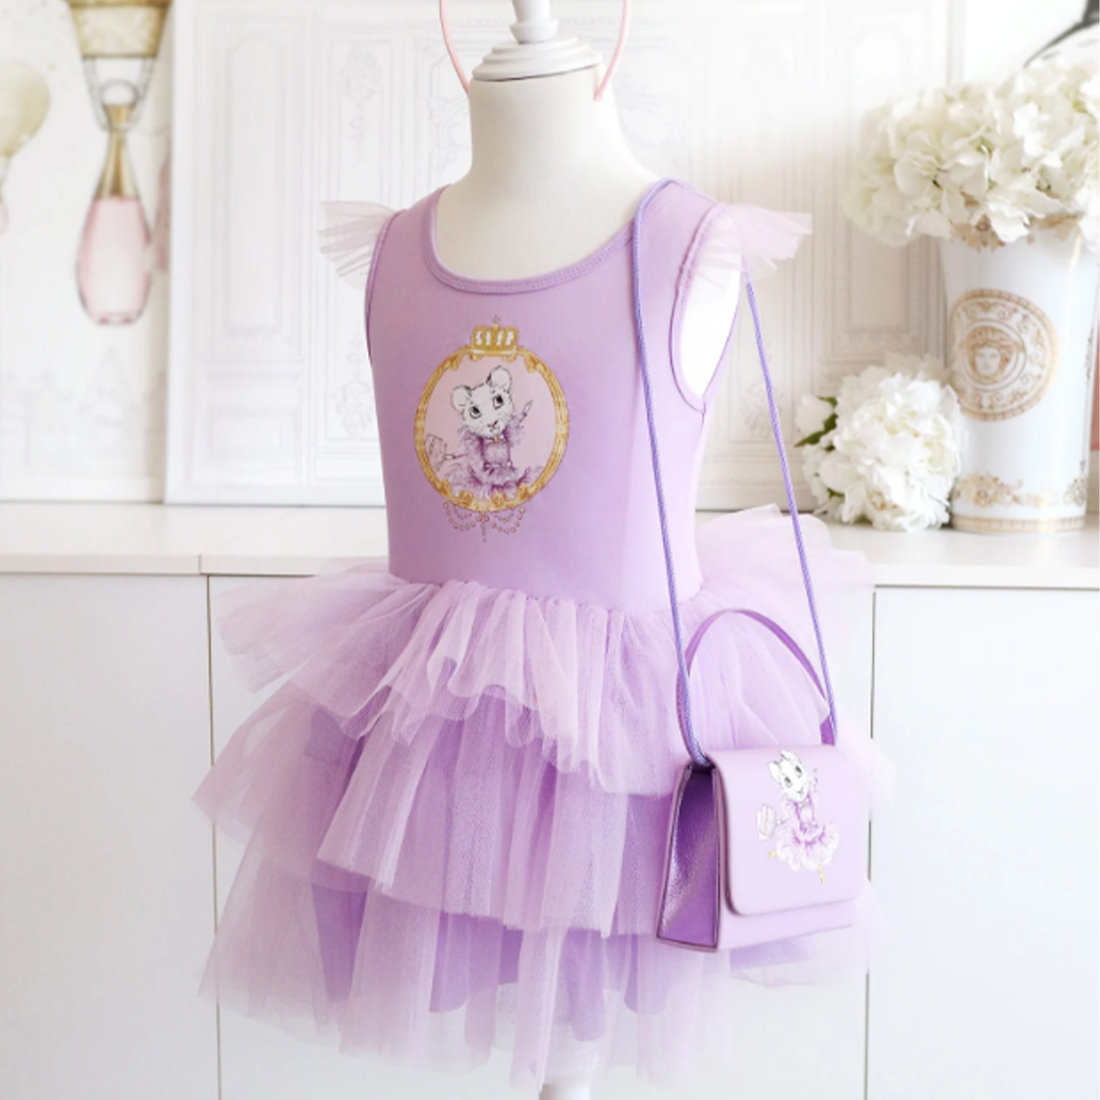 Claris The Secret Crown Fashion Dress in Lilac